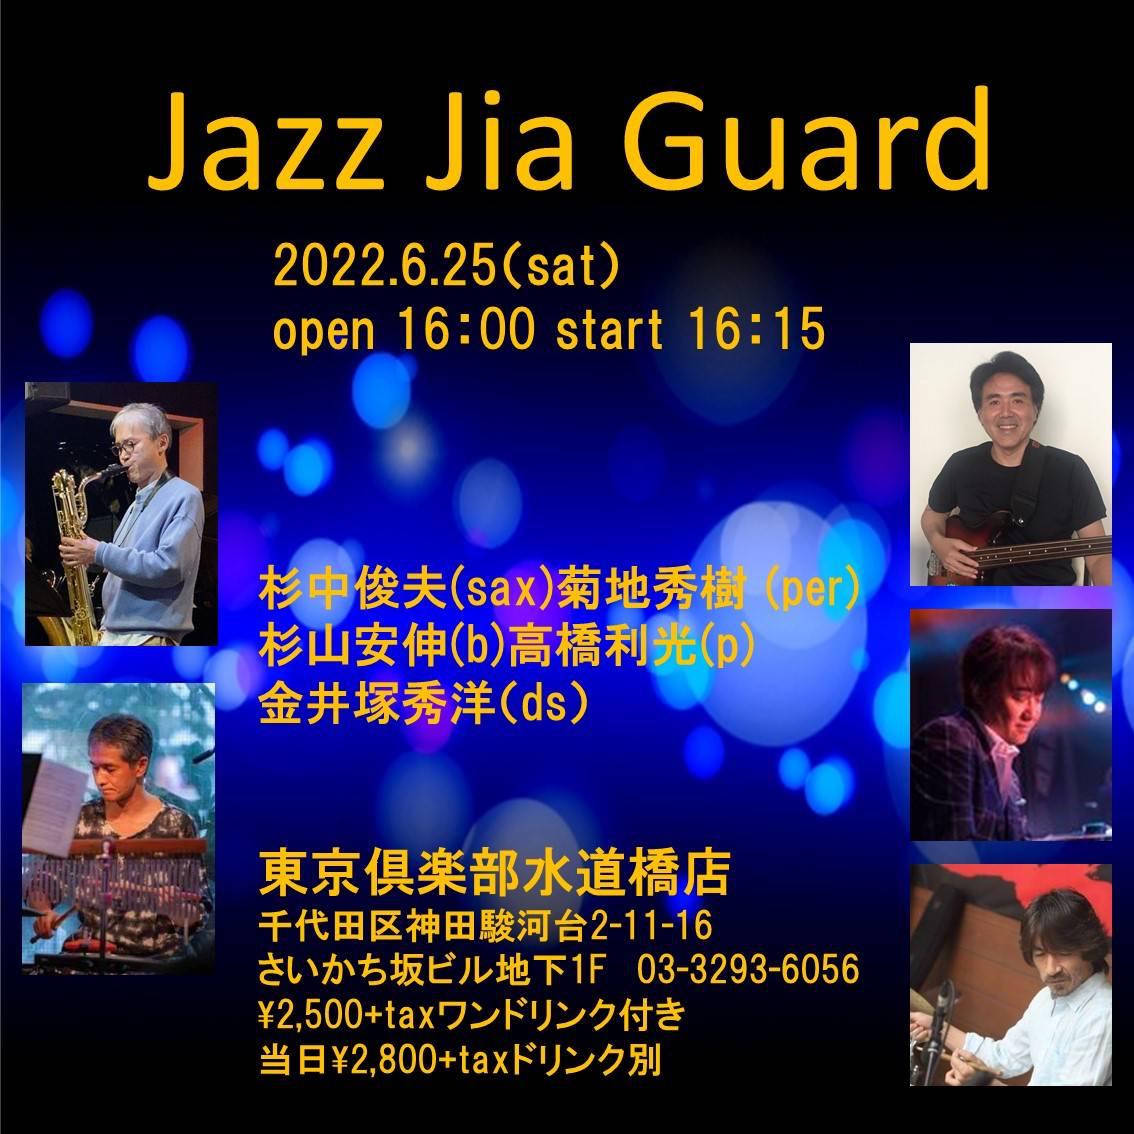 Jazz Jia Guard